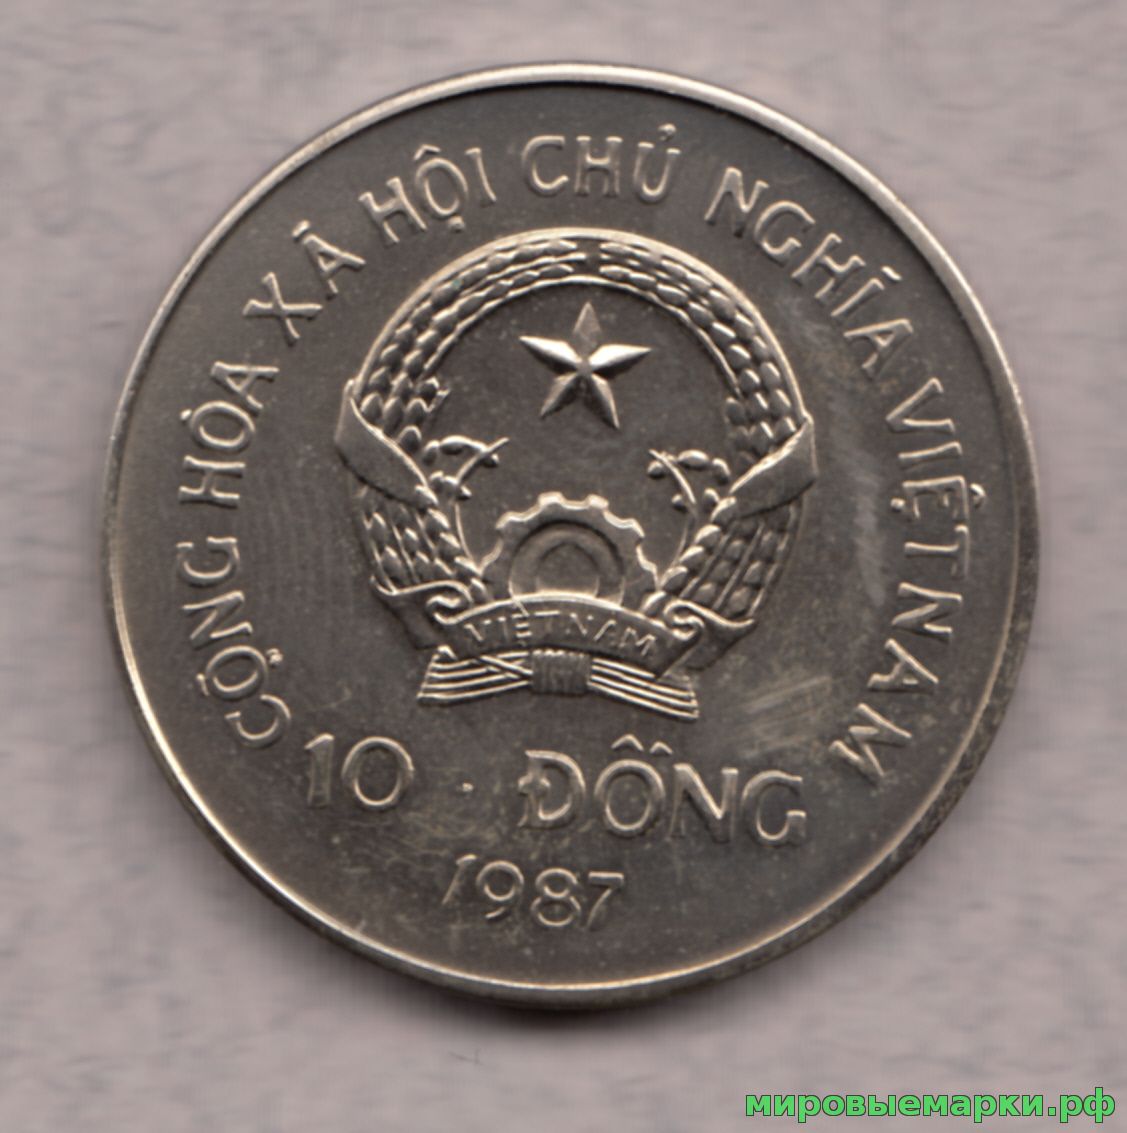 Вьетнам 1987 г. 10 донг, UNC(мешковые)